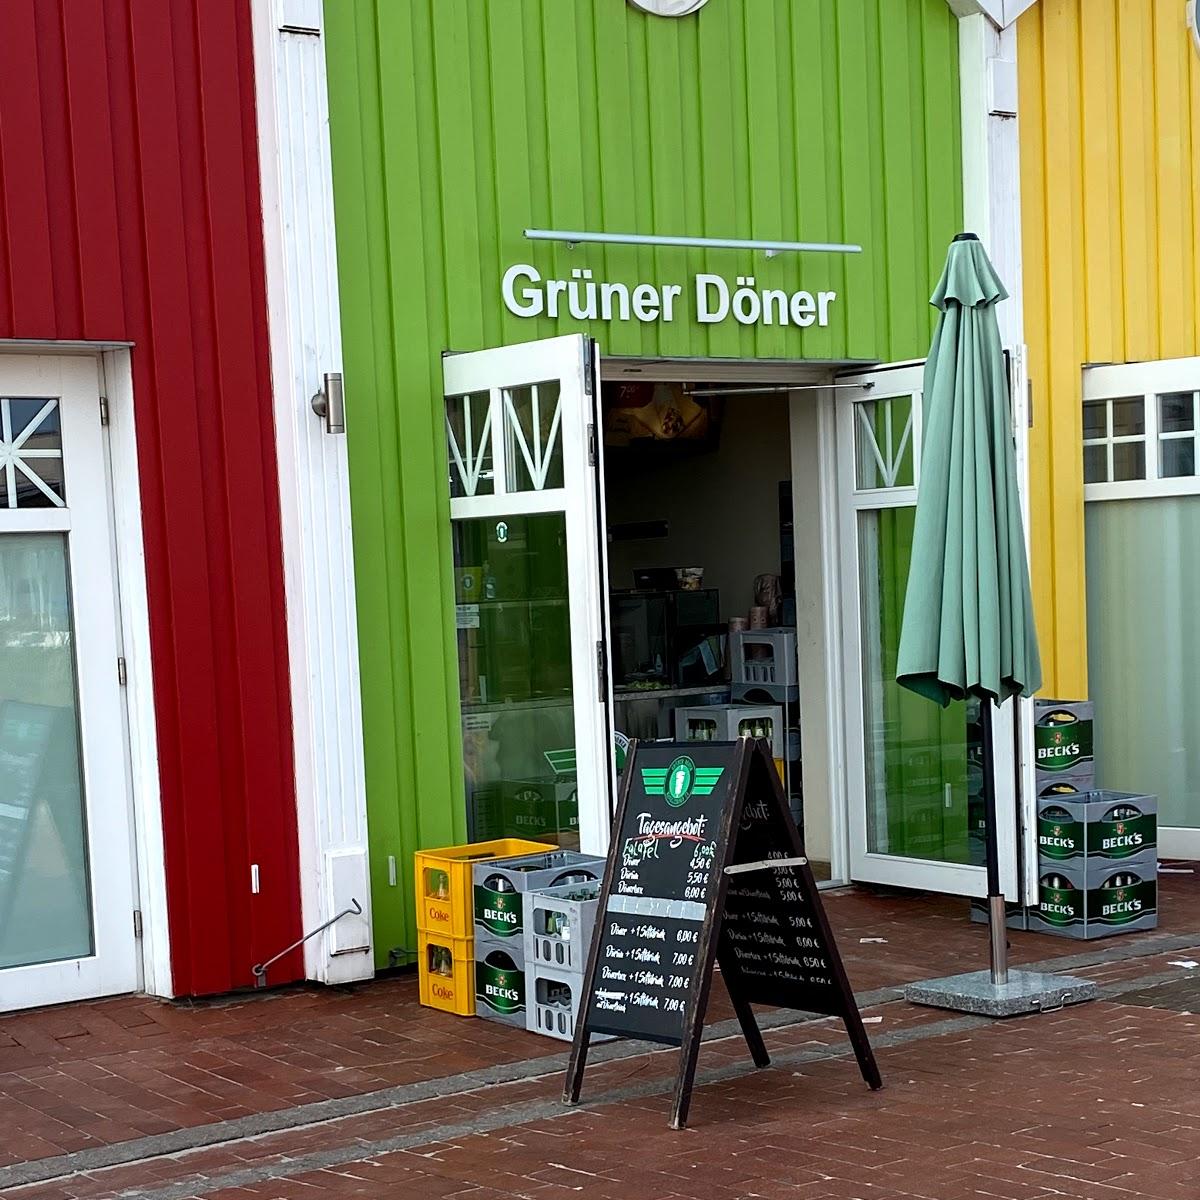 Restaurant "Grüner Döner" in Langeoog